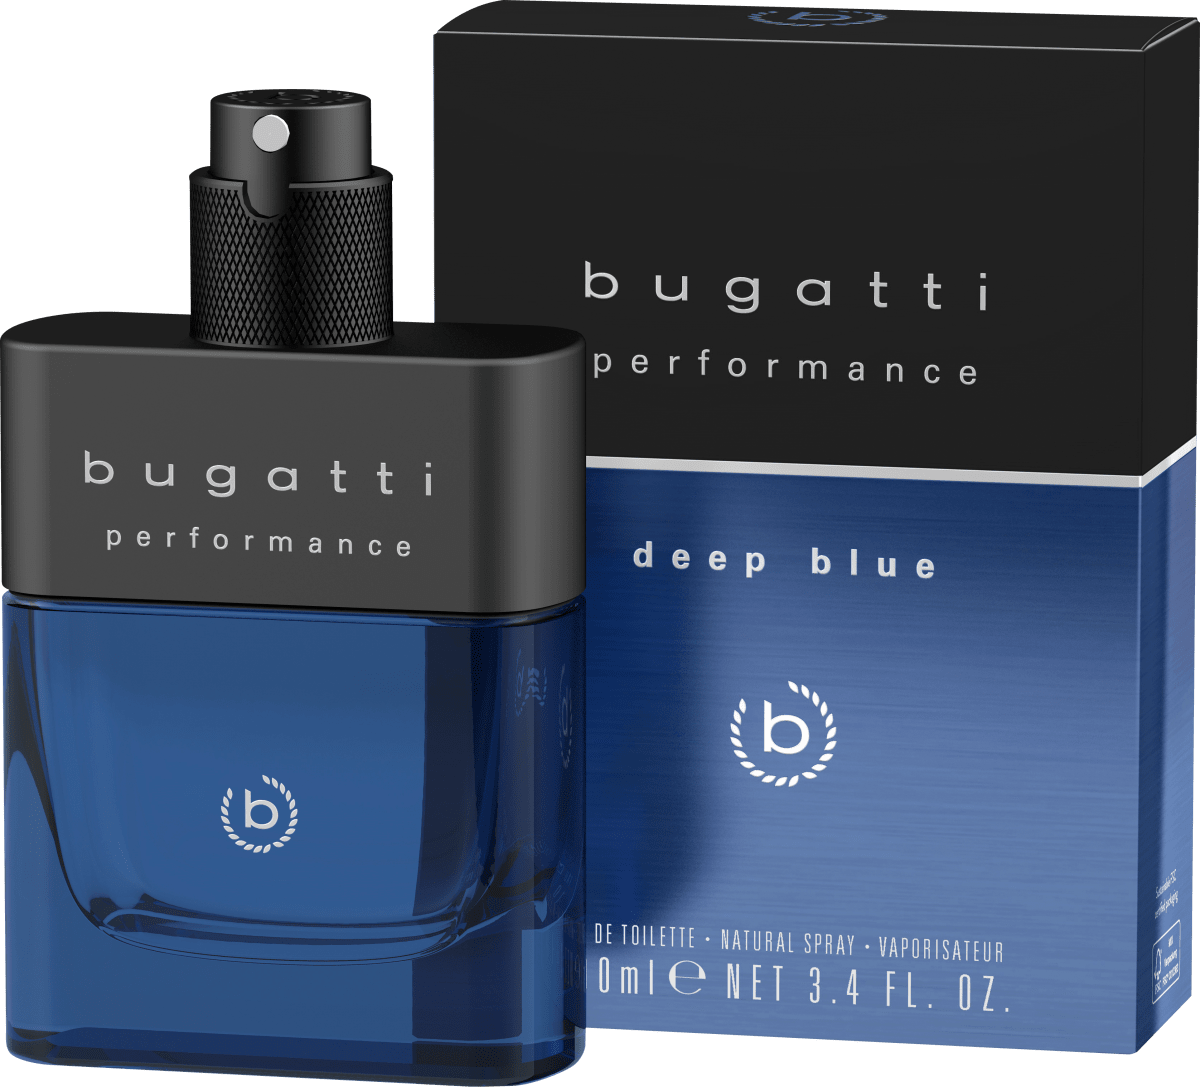 bugatti Eau de Toilette Performance deep blue, 100 ml